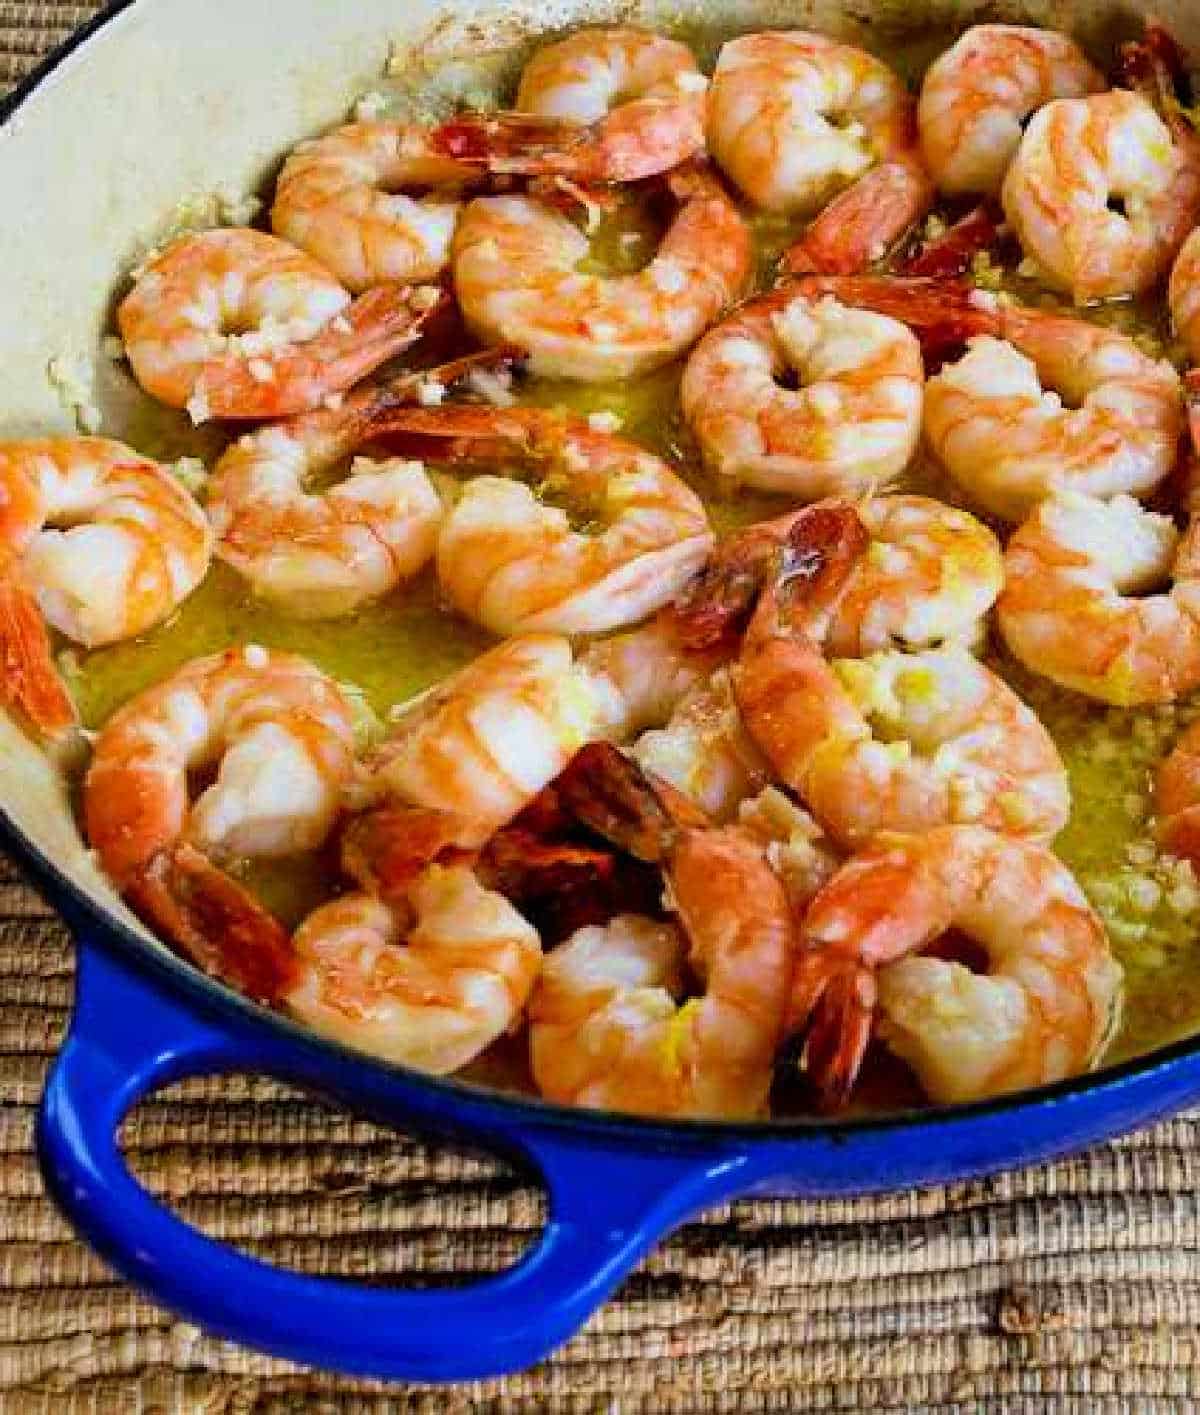 Easy Garlic and Lemon Shrimp cropped image of shrimp in pan